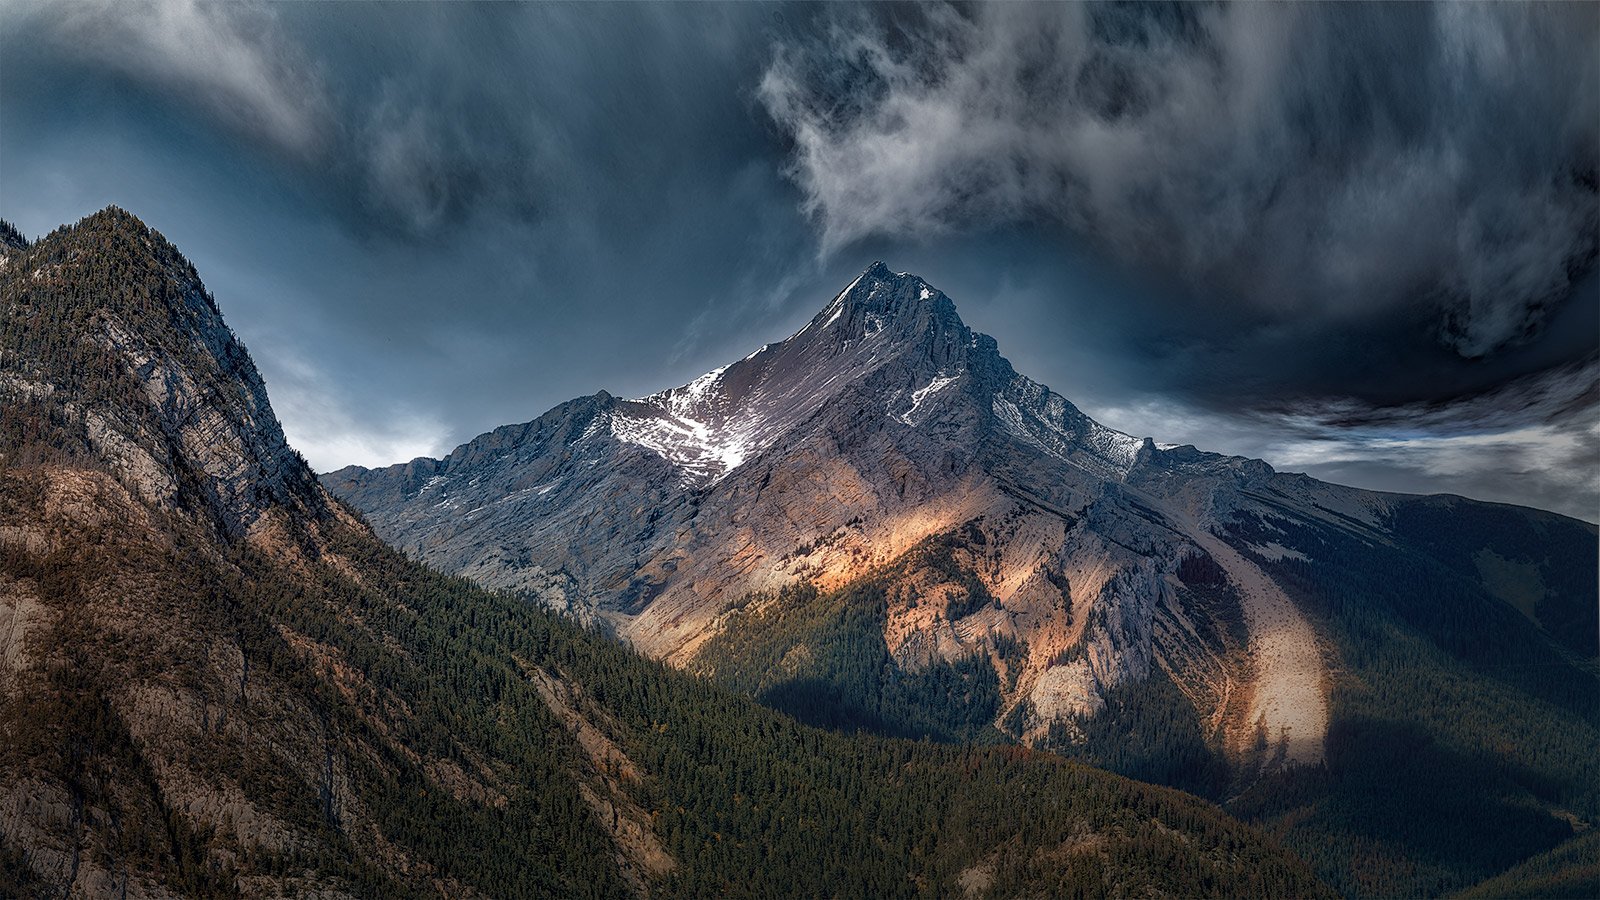 canada, alberta, sky, mountains, sunset, clouds, nikon, d850, @1pro.photo, Emelyanov Alex